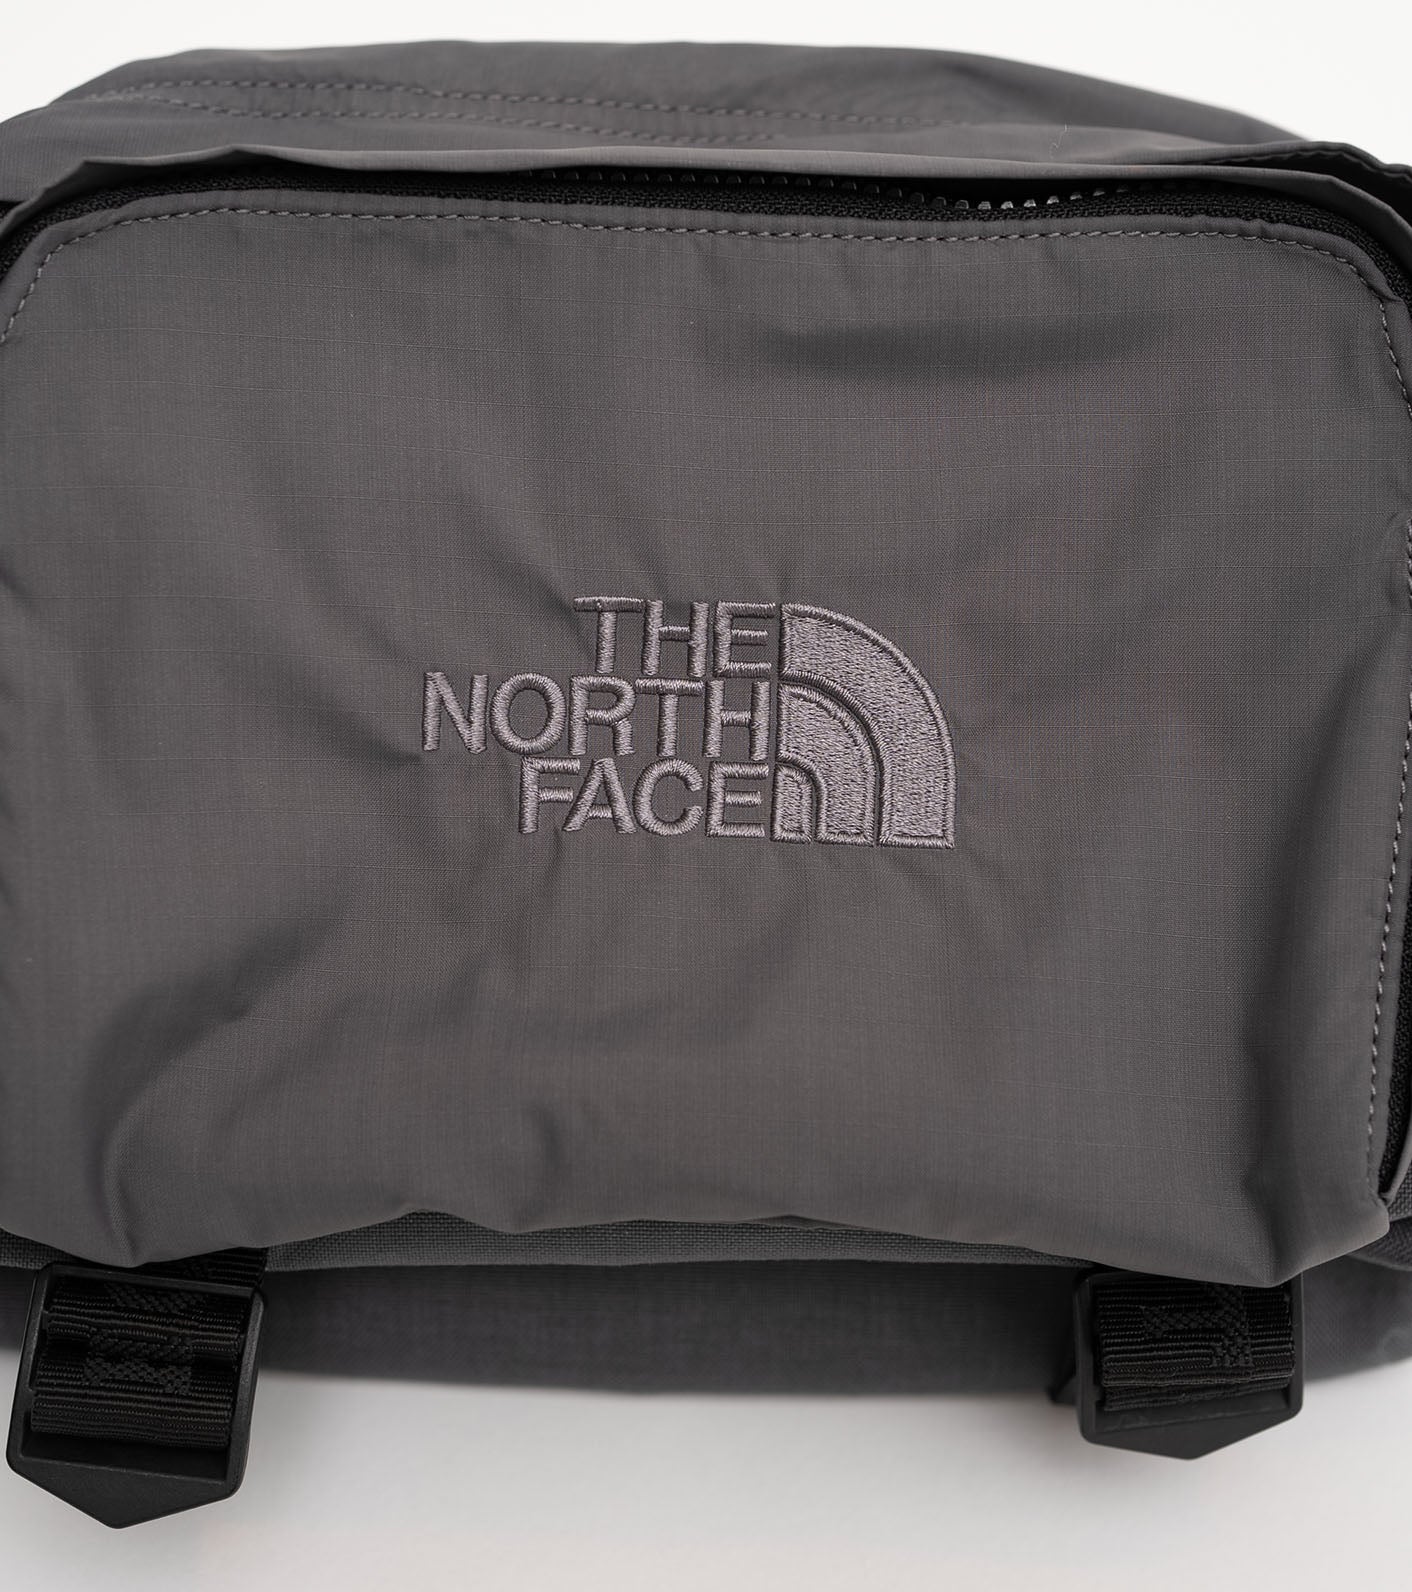 THE NORTH FACE PURPLE LABEL CORDURA Nylon Shoulder Bag